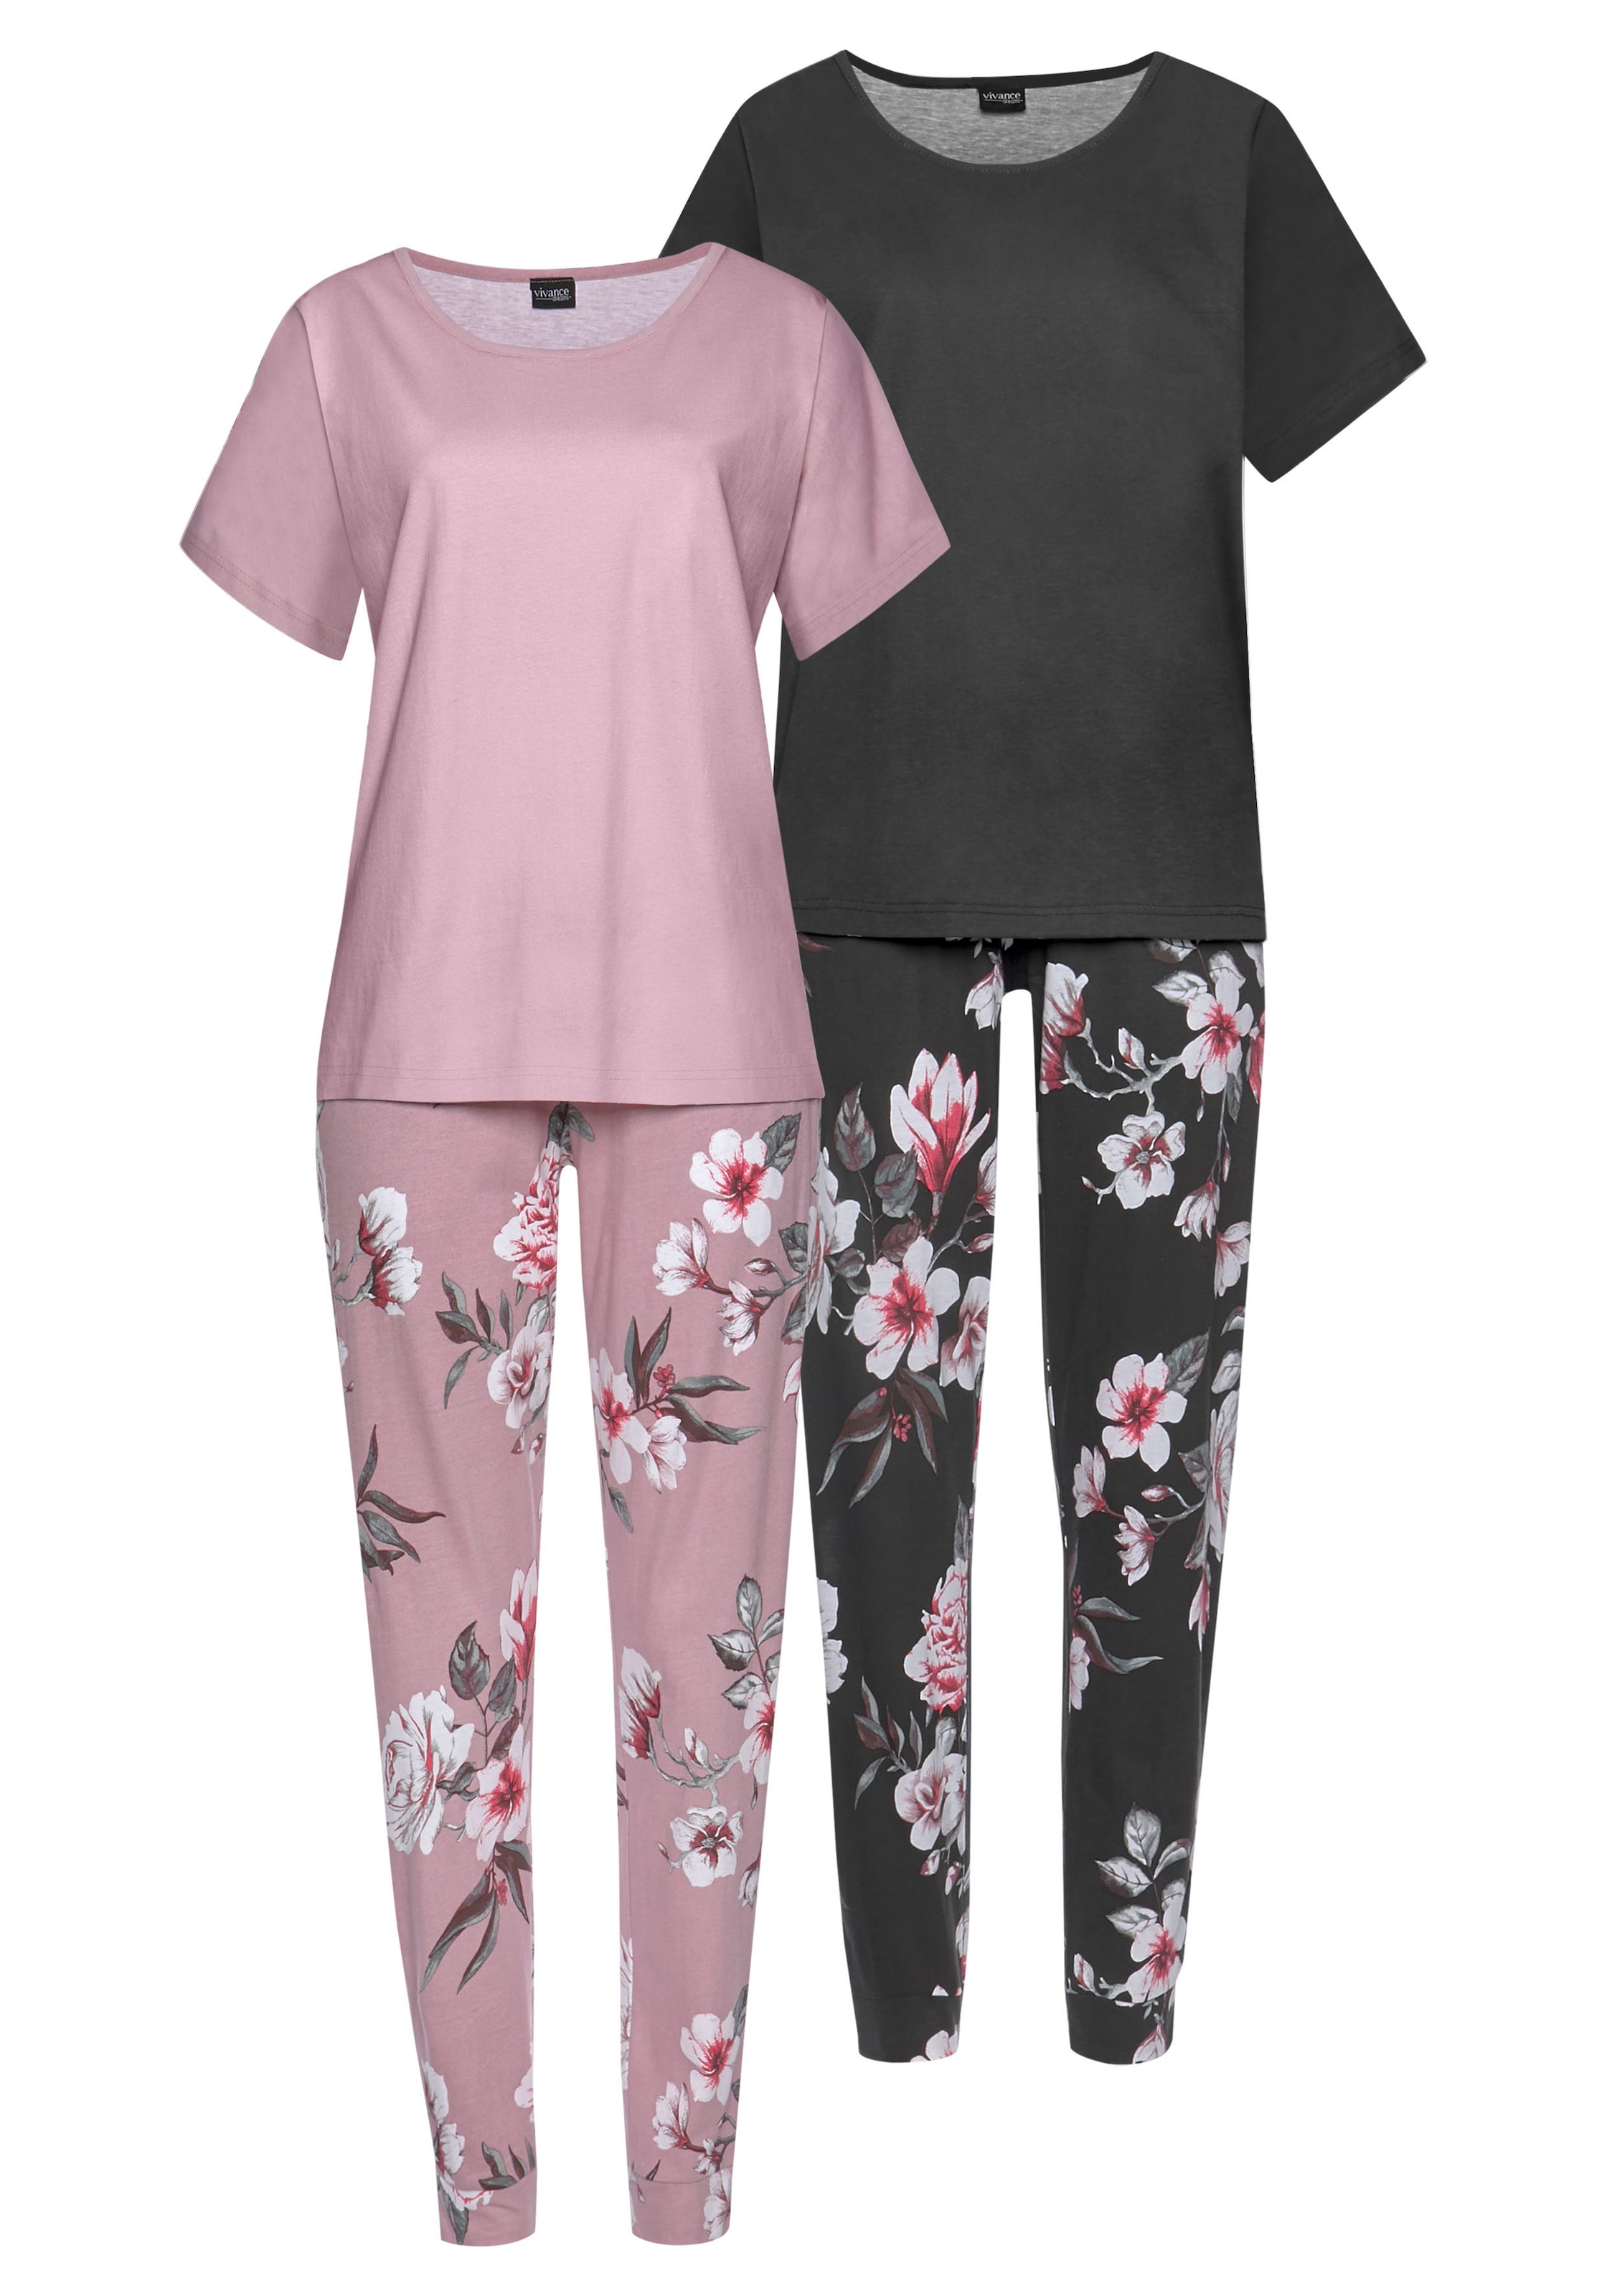 Vivance Dreams Pyjama, (4 tlg., 2 Stück), mit Blumendruck » LASCANA |  Bademode, Unterwäsche & Lingerie online kaufen | Pyjamas